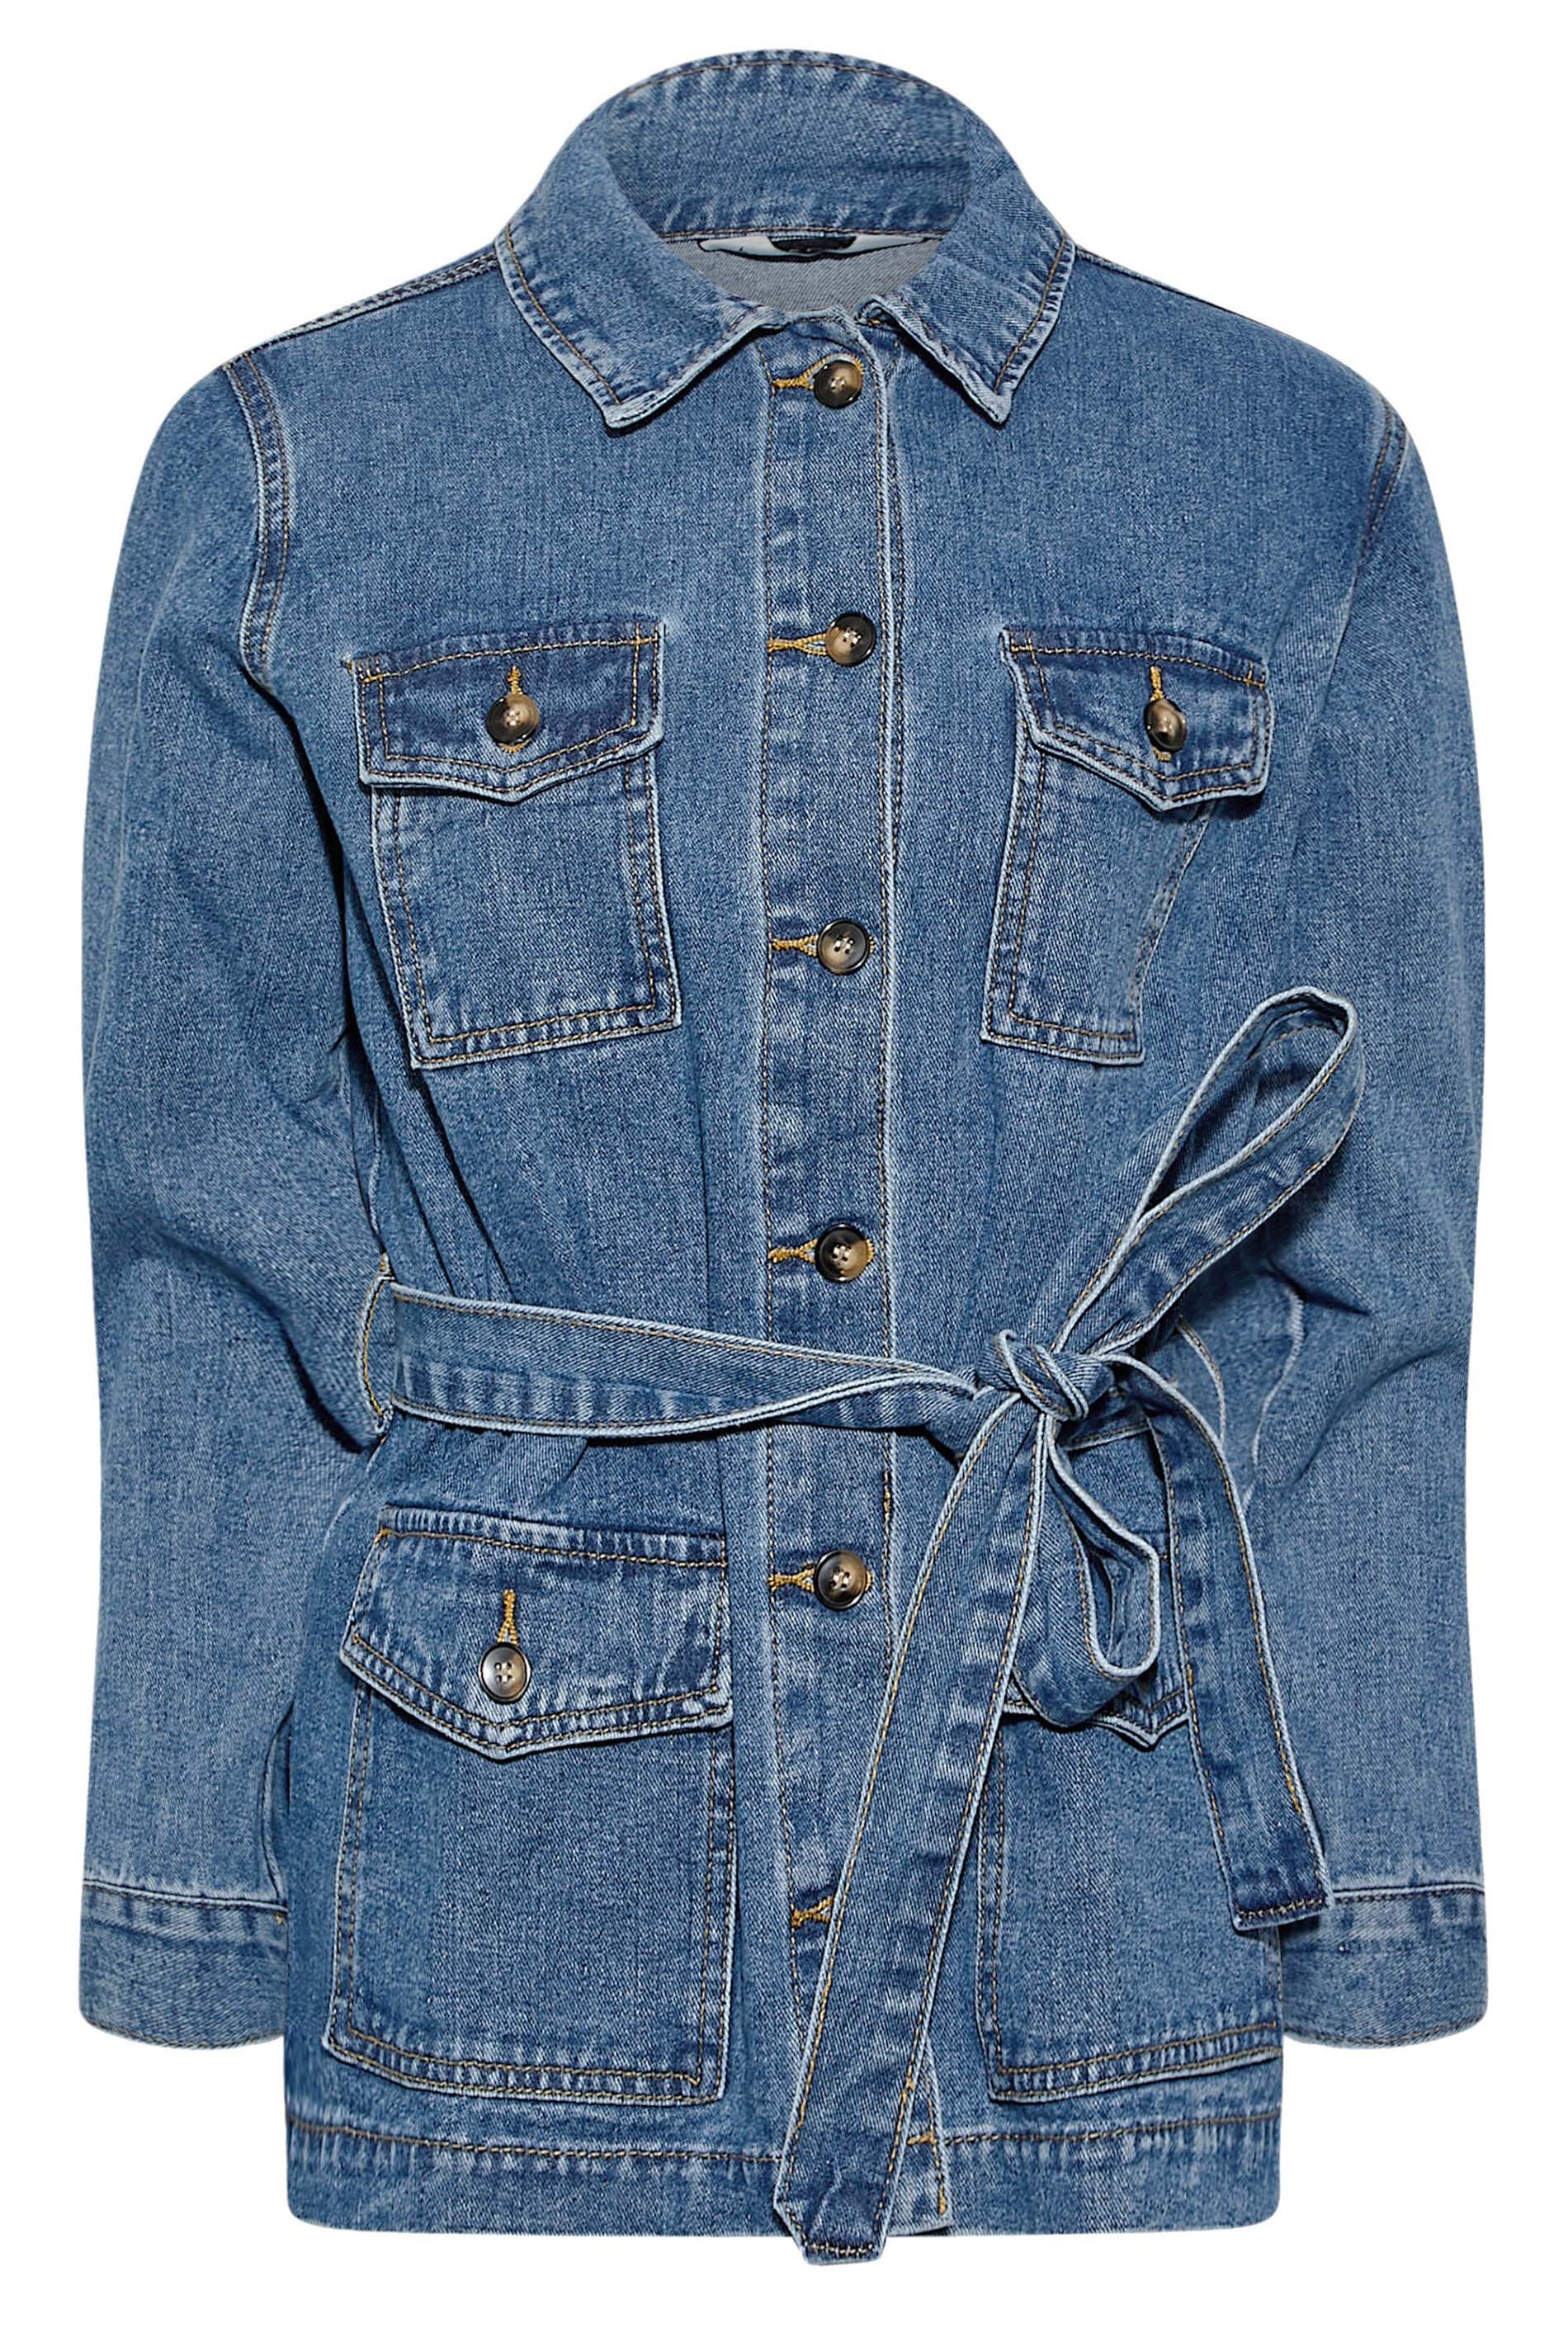 New look - light blue denim Jacket - uk 8 | eBay